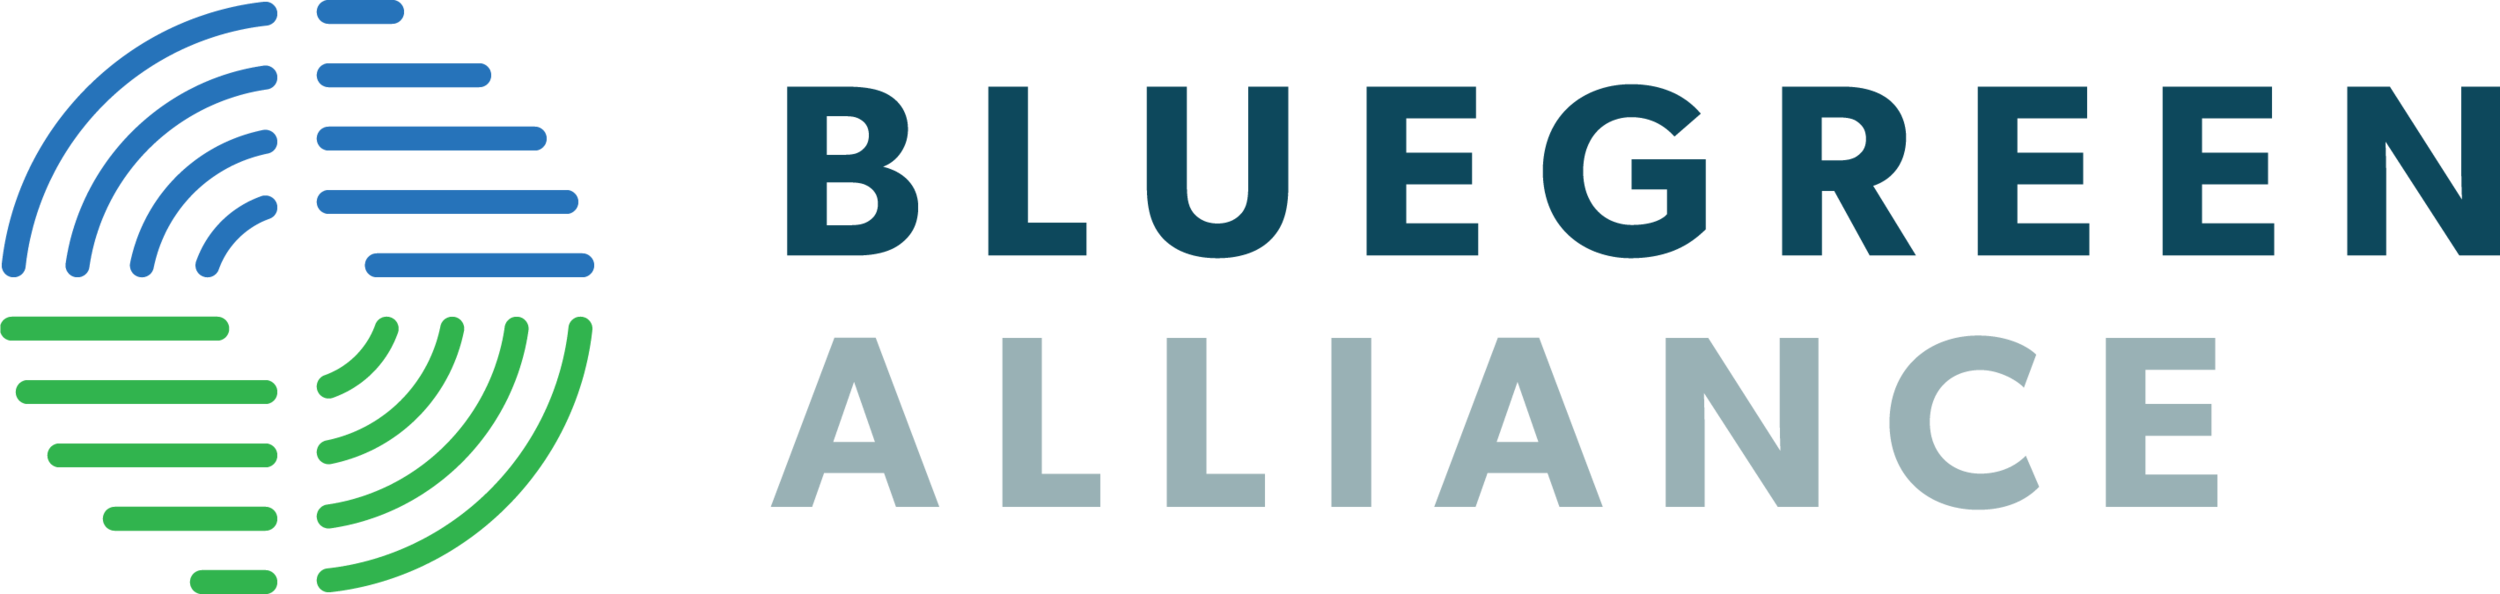 Blue Green Alliance-logo2016_RGB.png